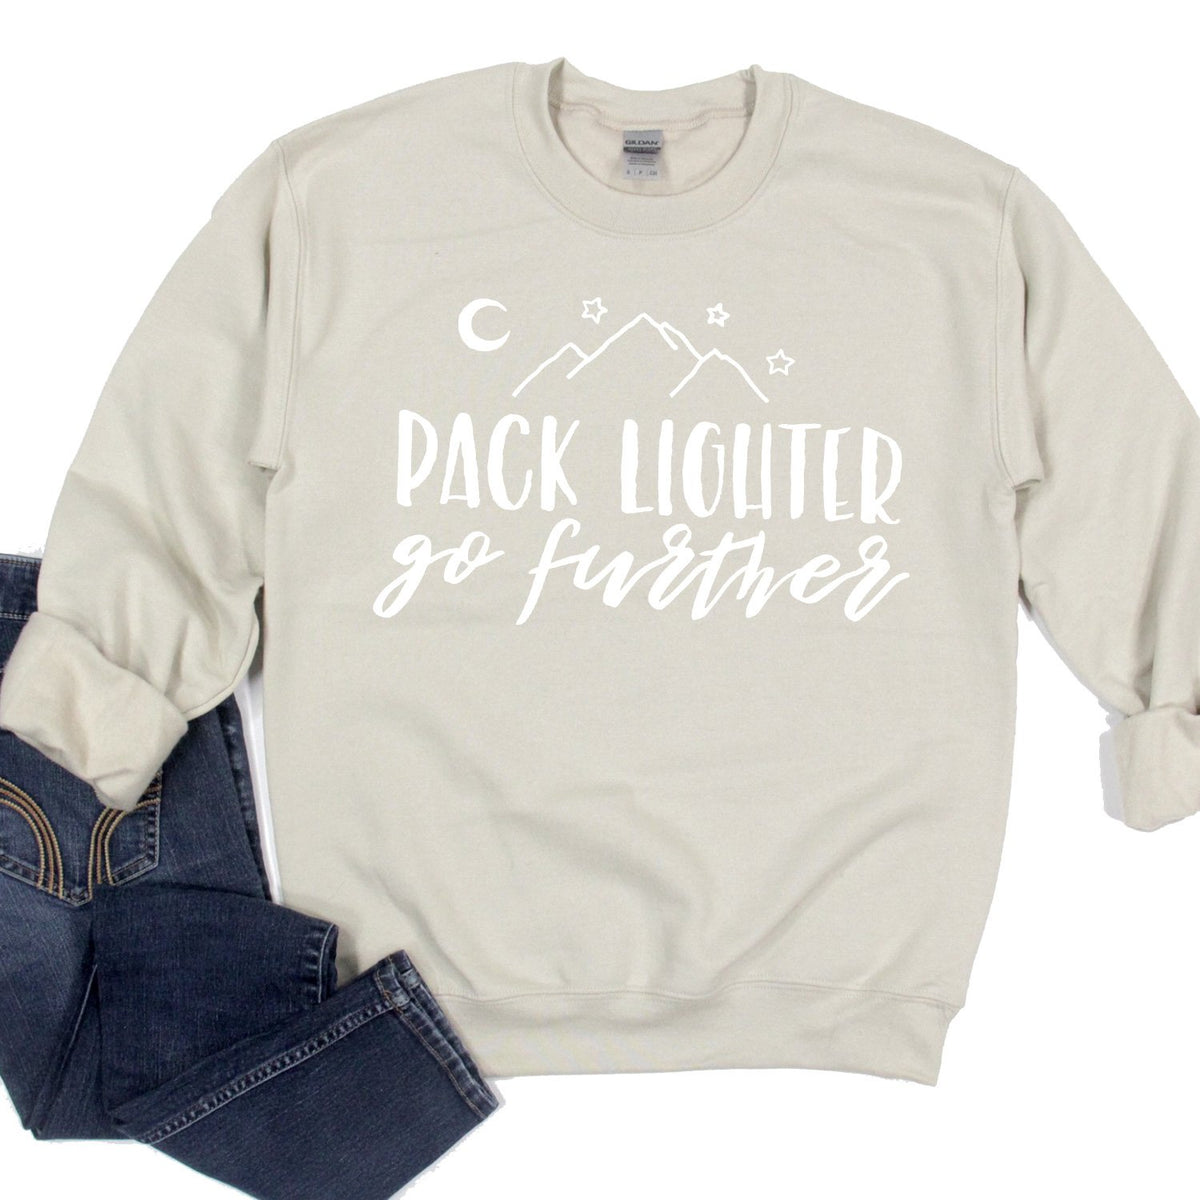 Pack Lighter Go Further - Long Sleeve Heavy Crewneck Sweatshirt